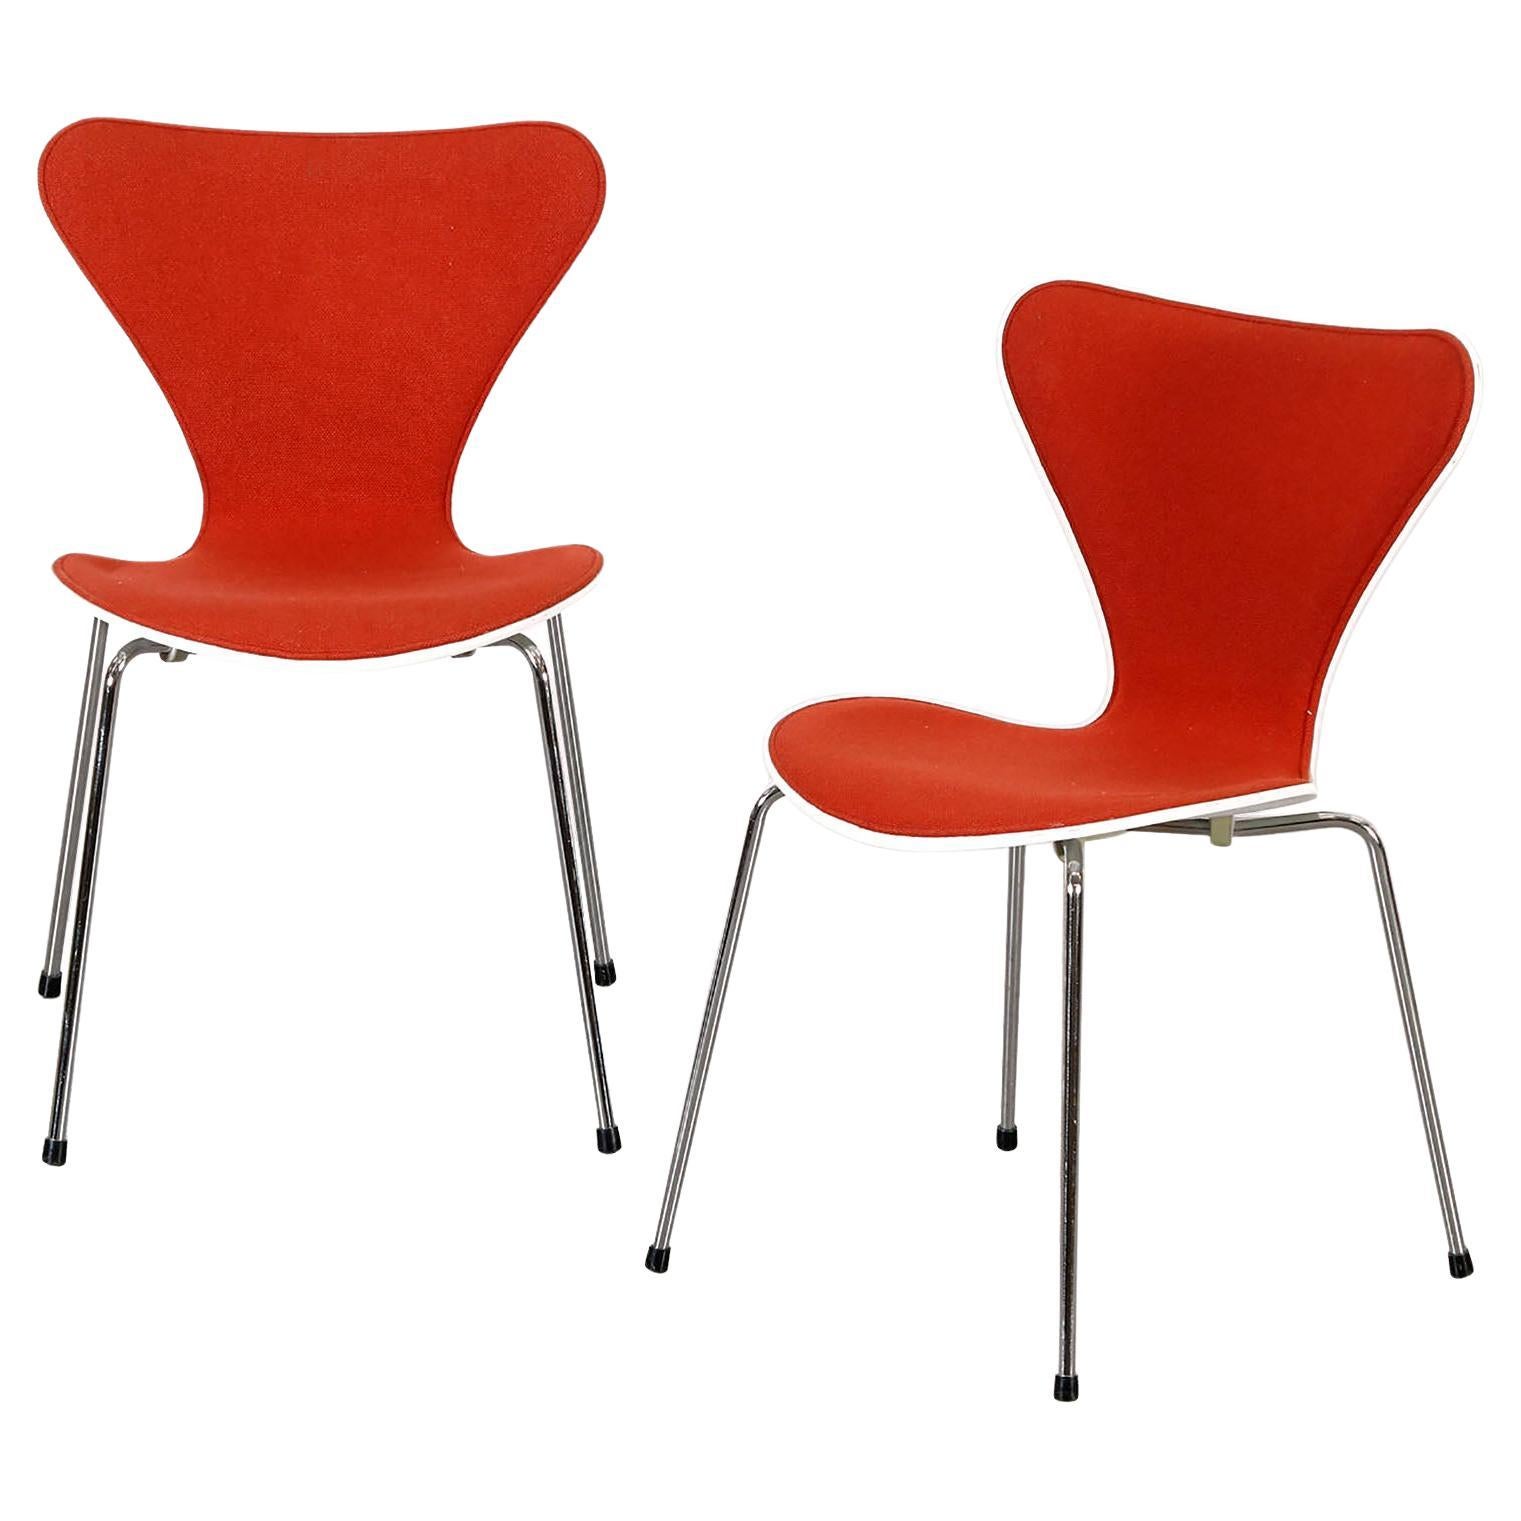 Arne Jacobsen Series 7 Chairs by Fritz Hansen, Model 3107